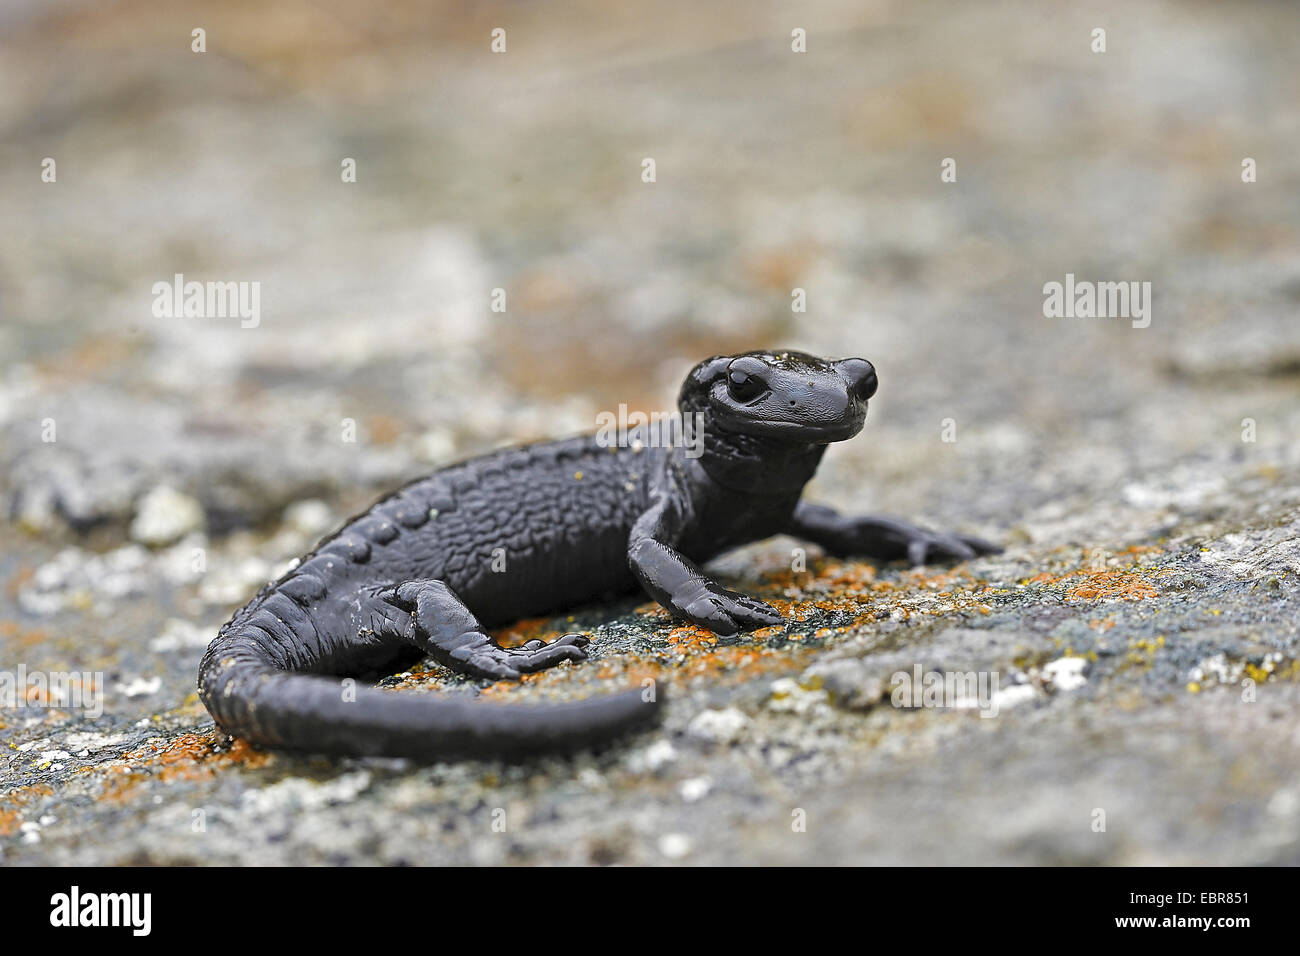 Alpine salamander, European Alpine salamander (Salamandra atra), lying on a rock, Germany Stock Photo